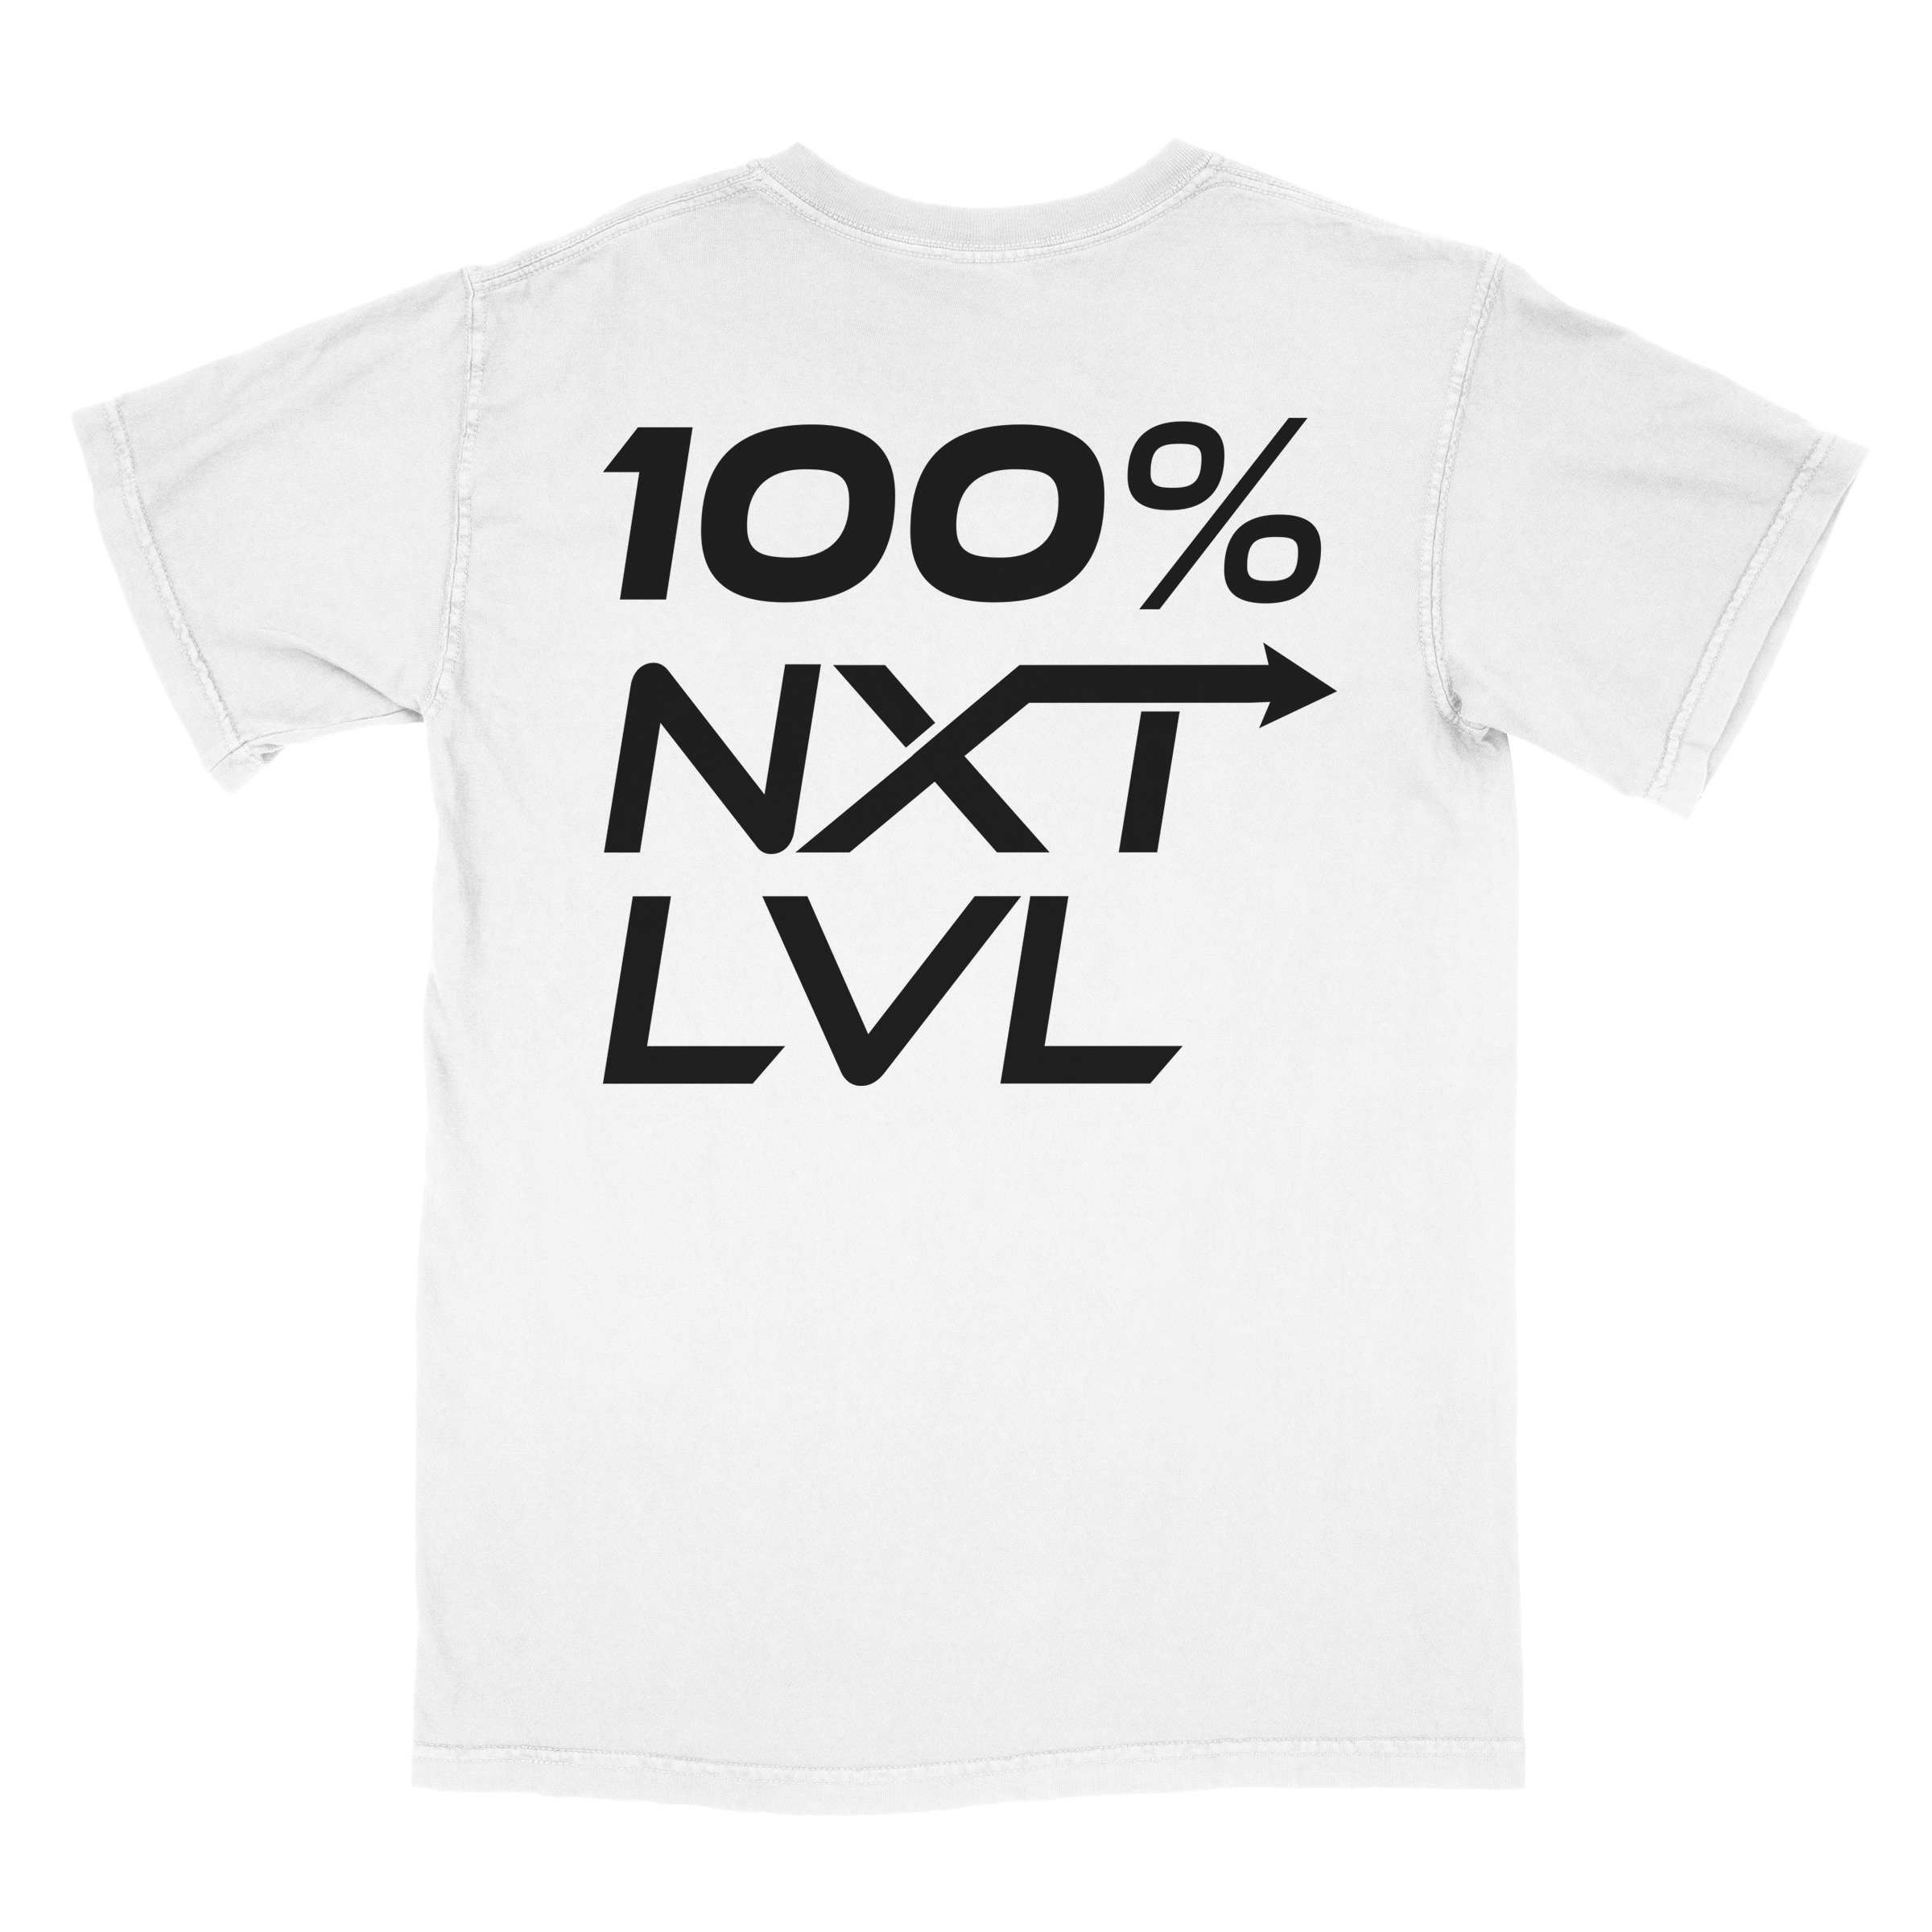 100% NXT LVL Tee - White